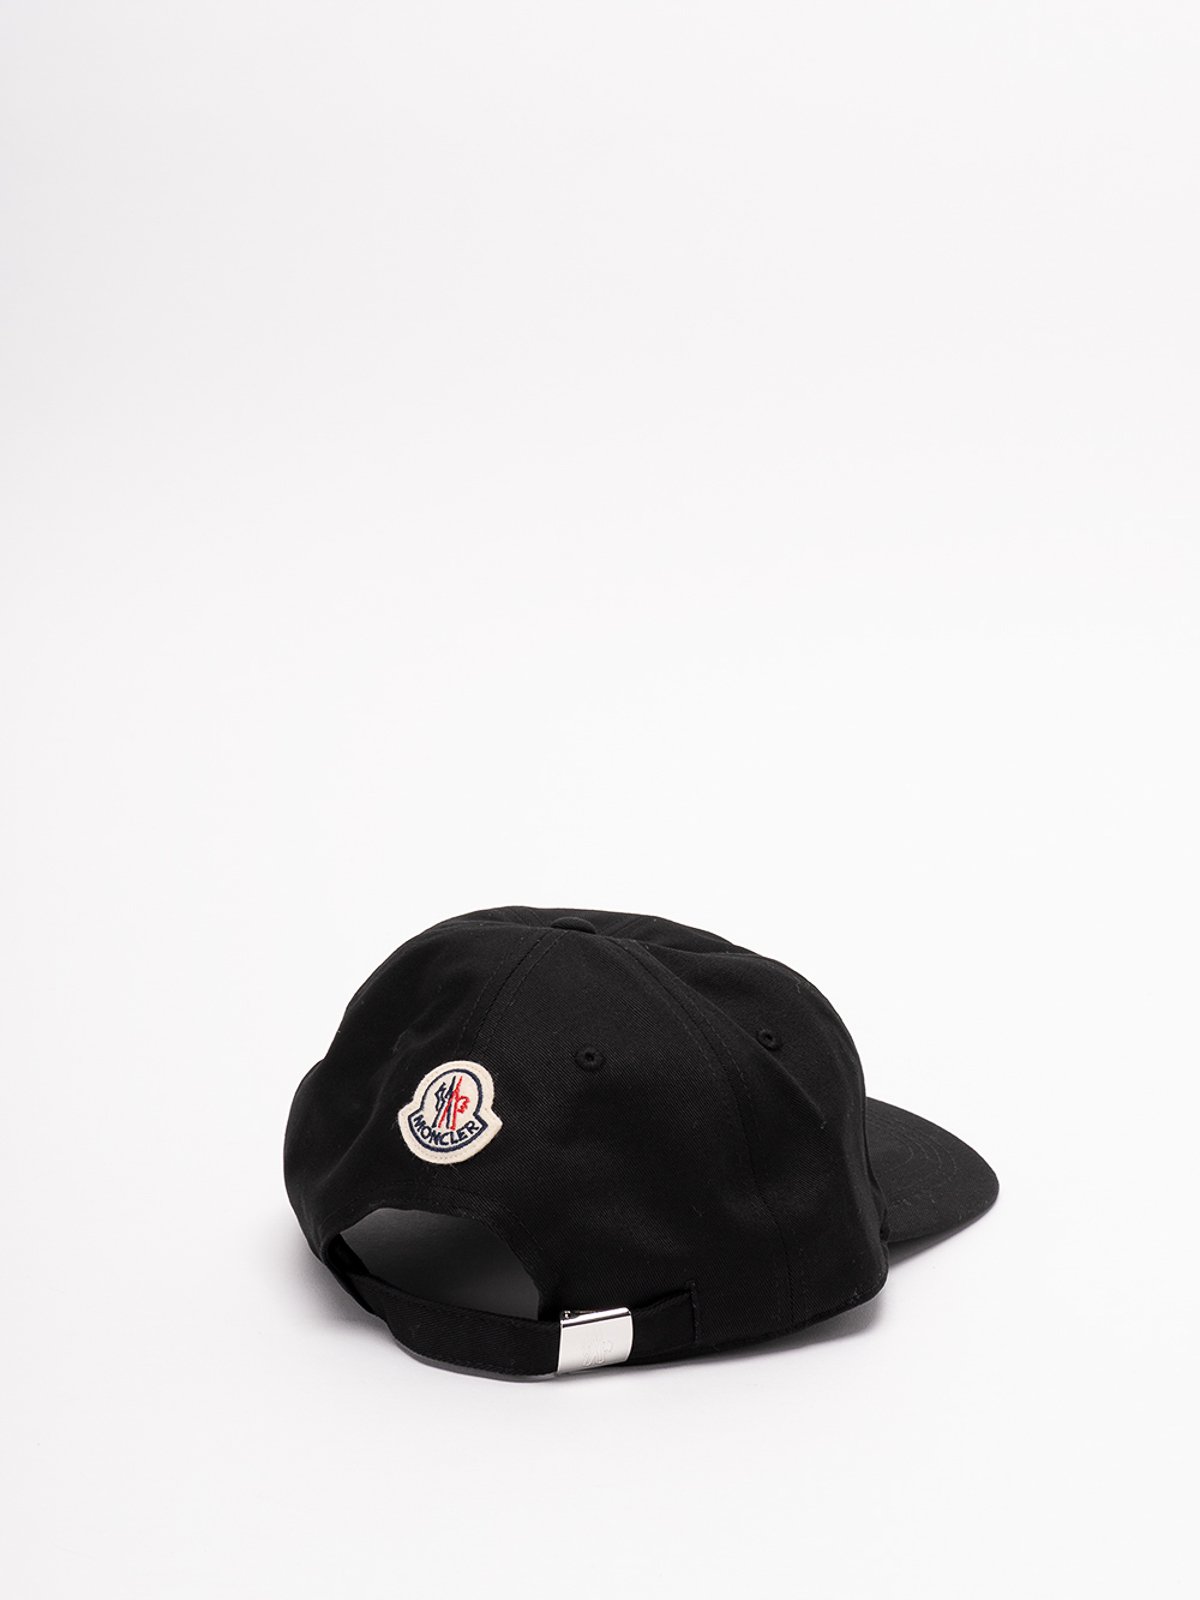 Hats and caps Moncler - Baseball cap